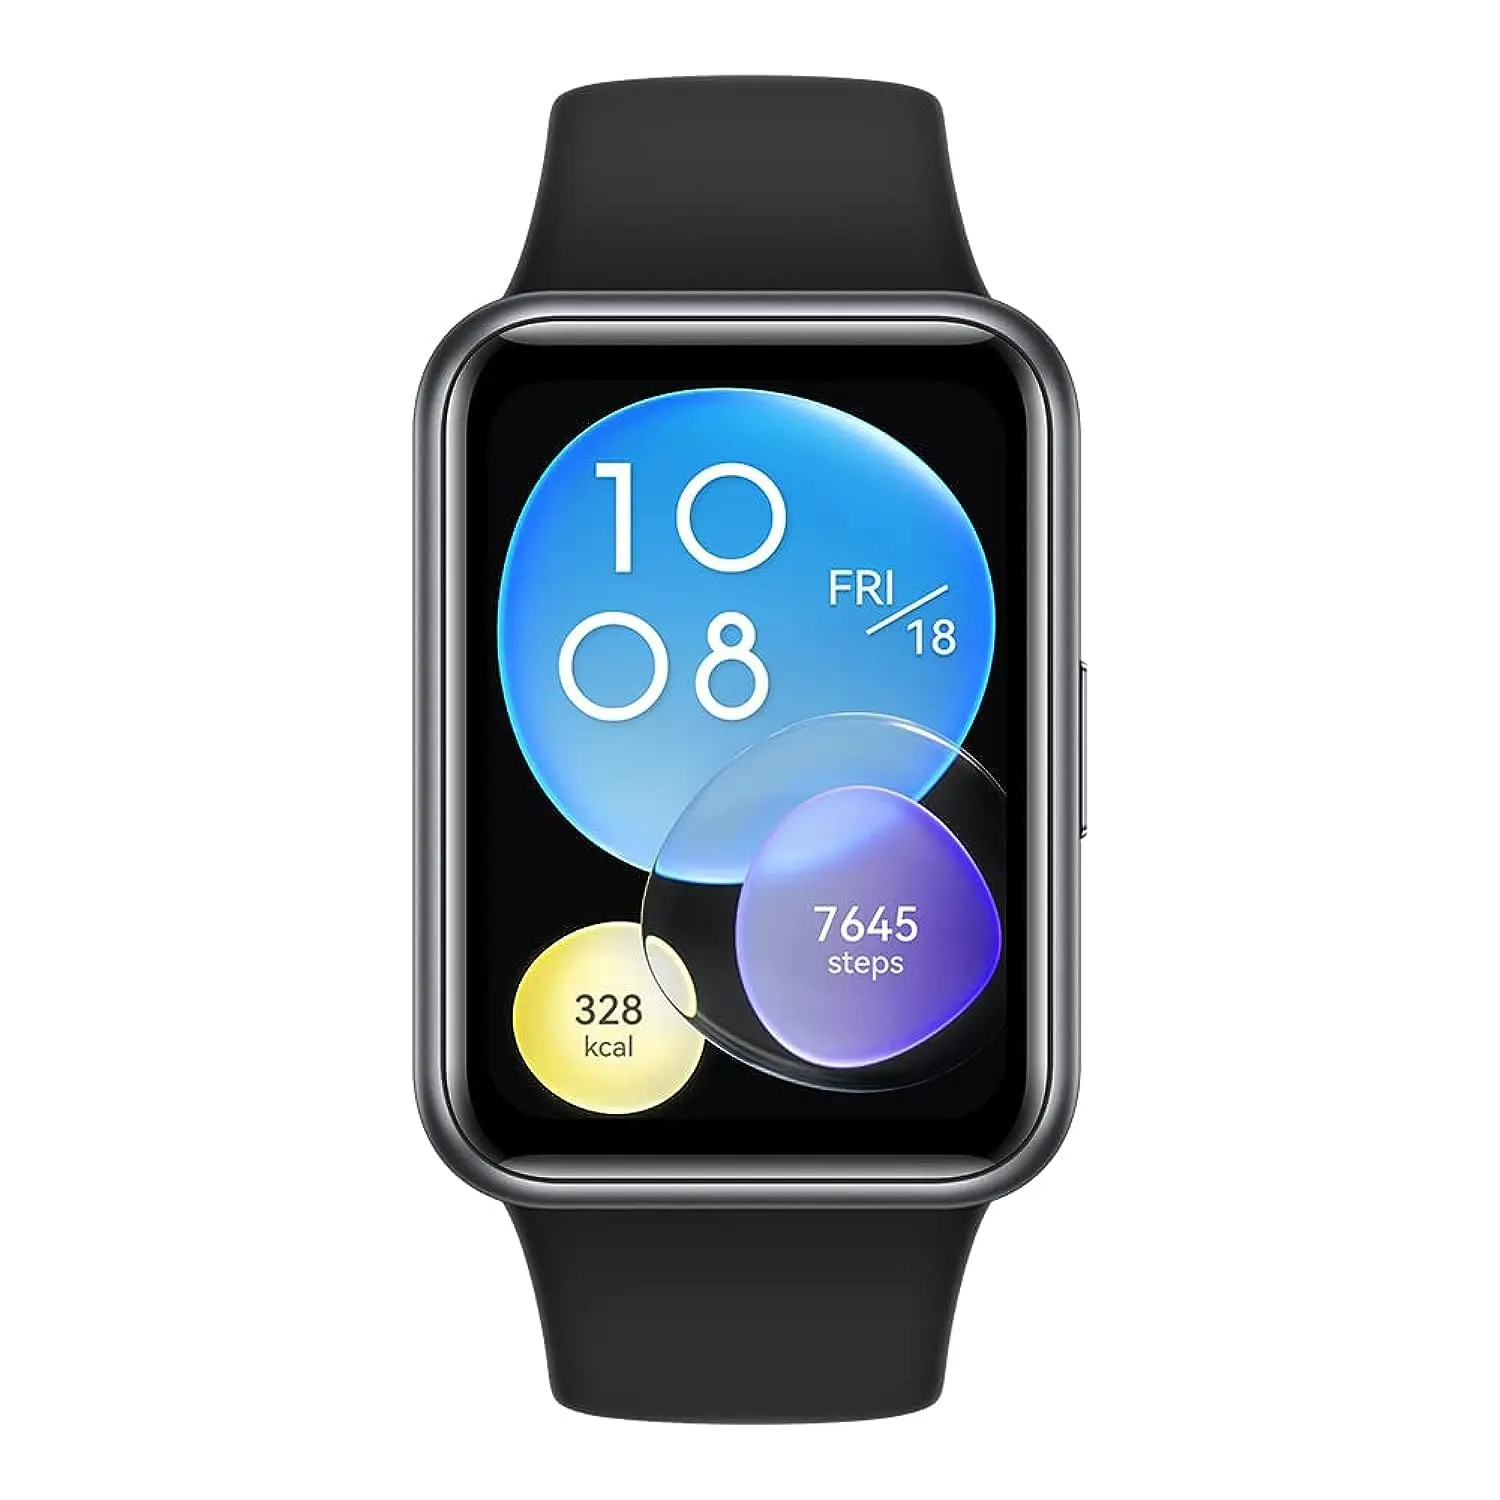 huawei pulsera smartwatch bluetooth reloj inteligente android - La Huawei Band 6 es compatible con Android